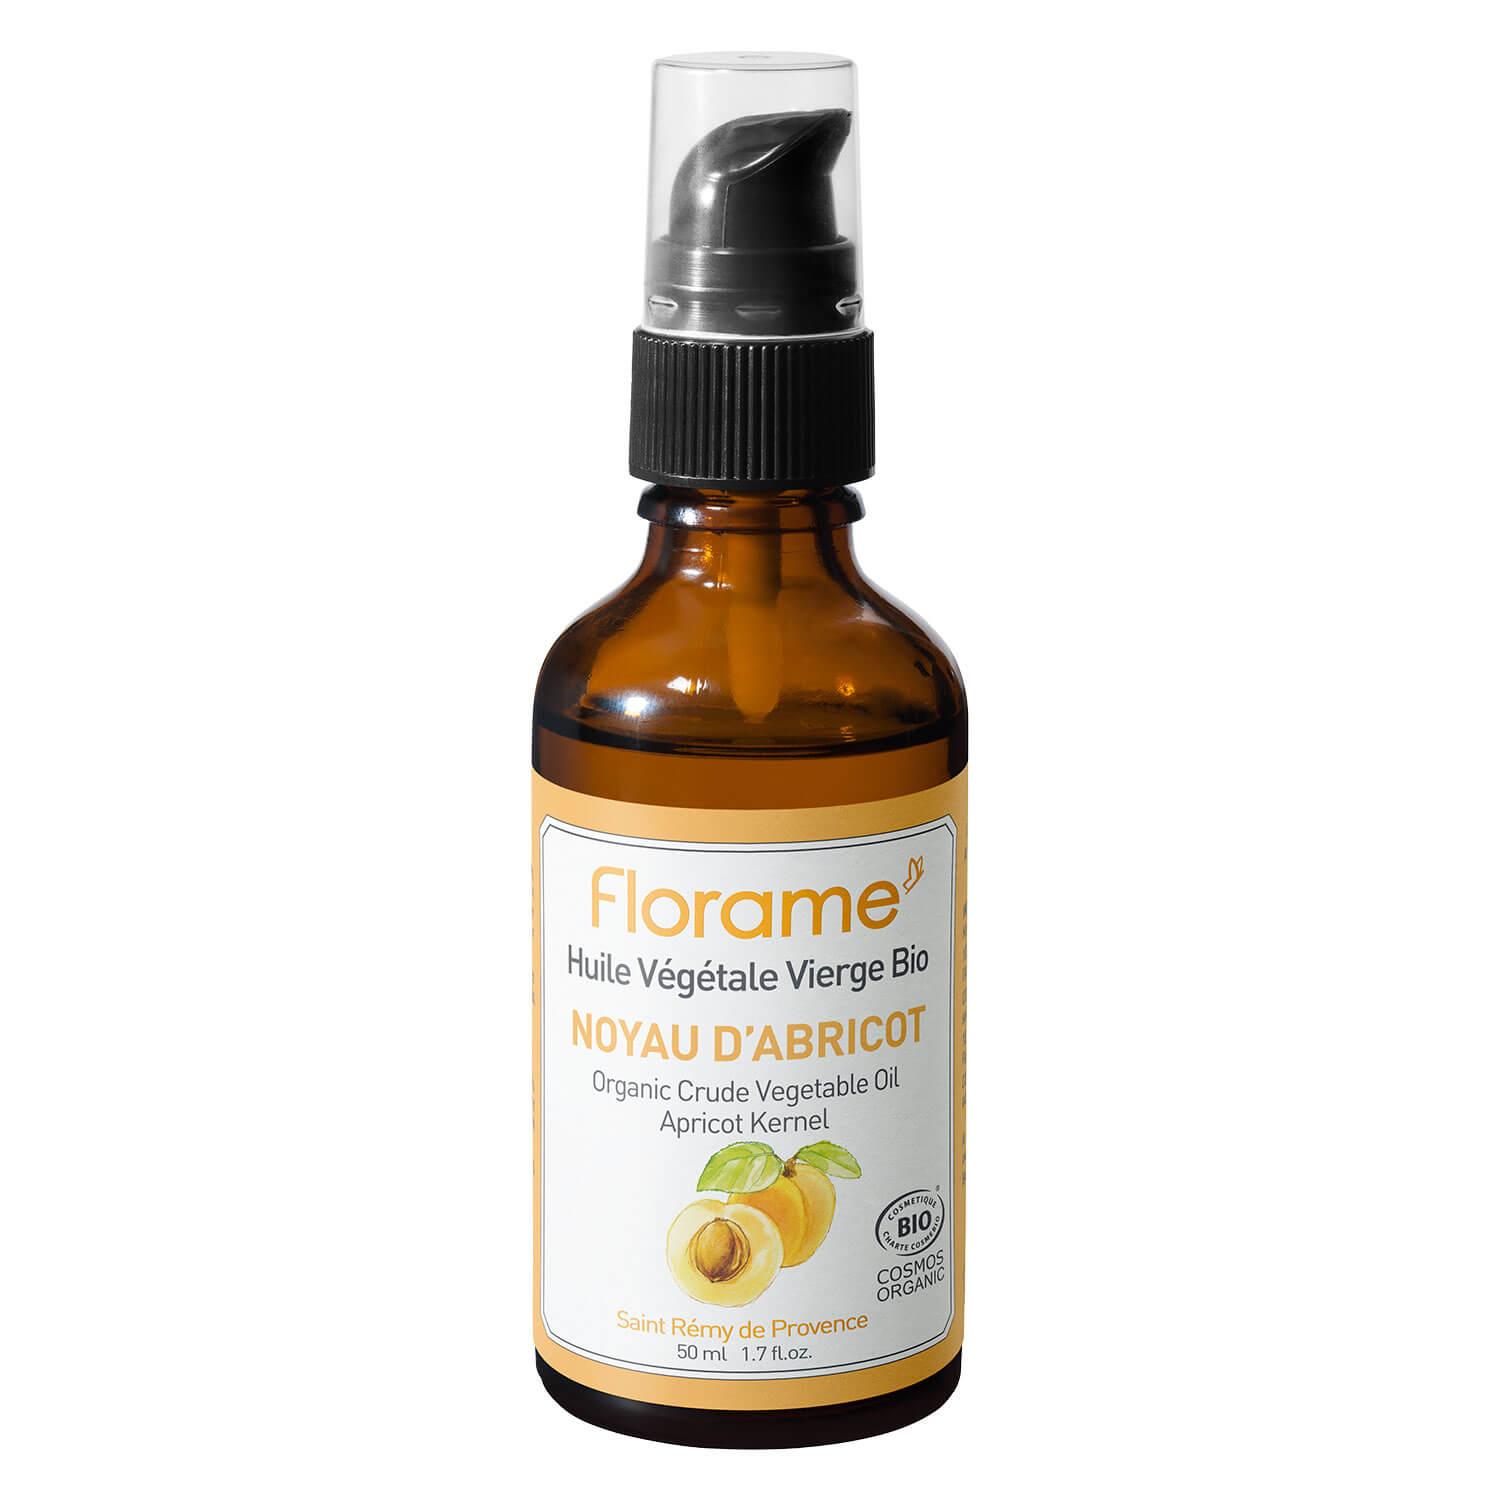 Florame - Organic Apricol Kernels Vegetable Oil